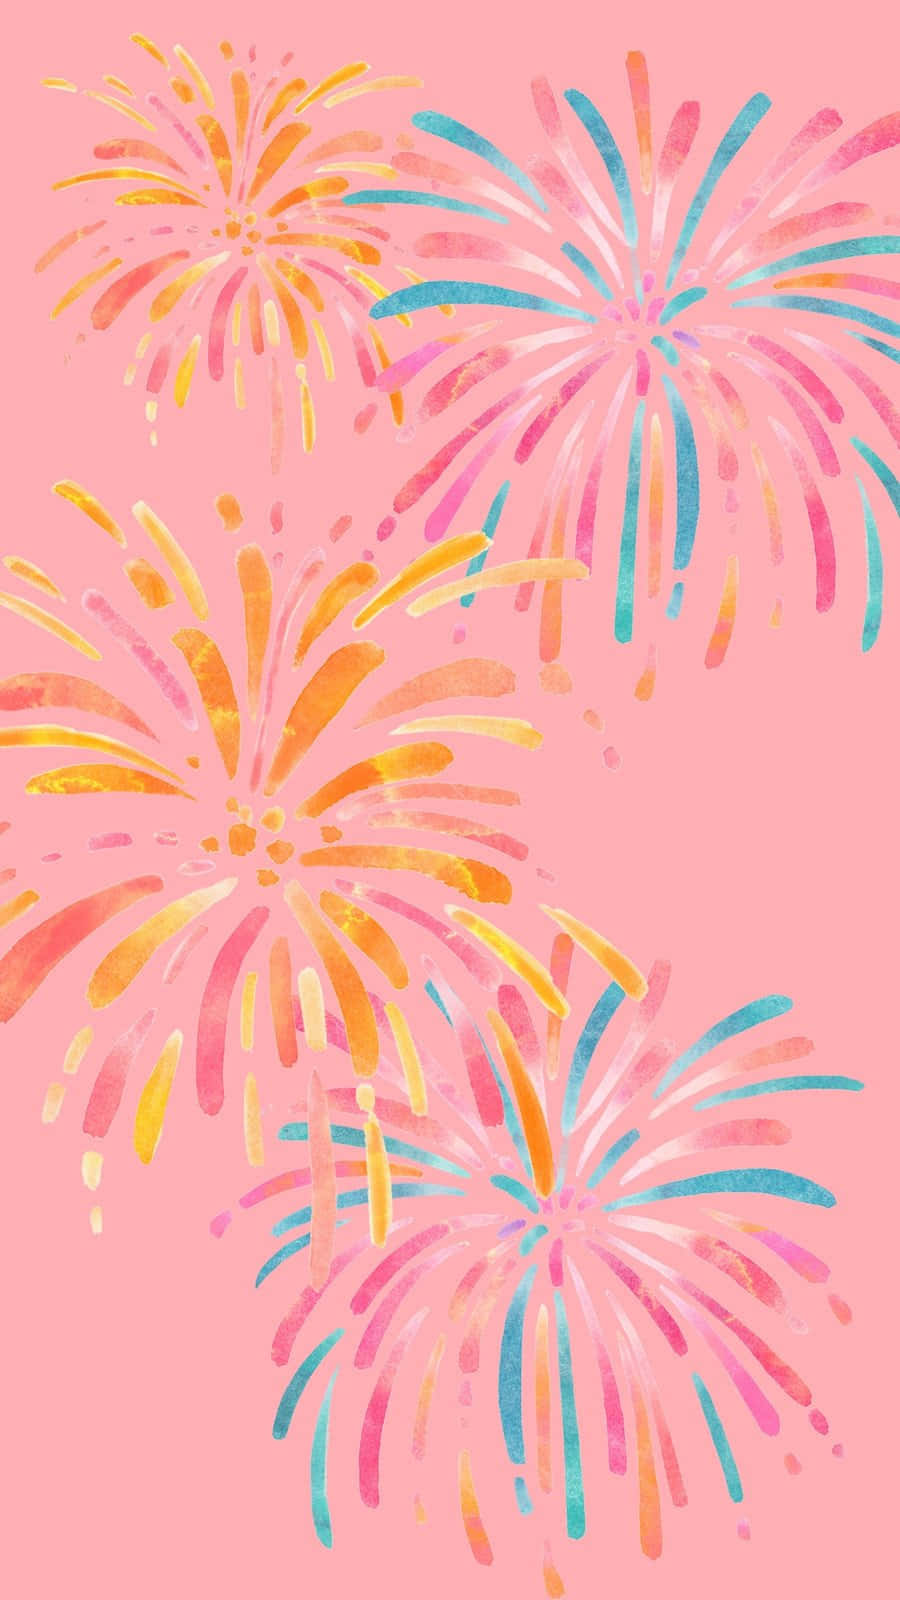 Pastel Color Fireworks Graphic Art